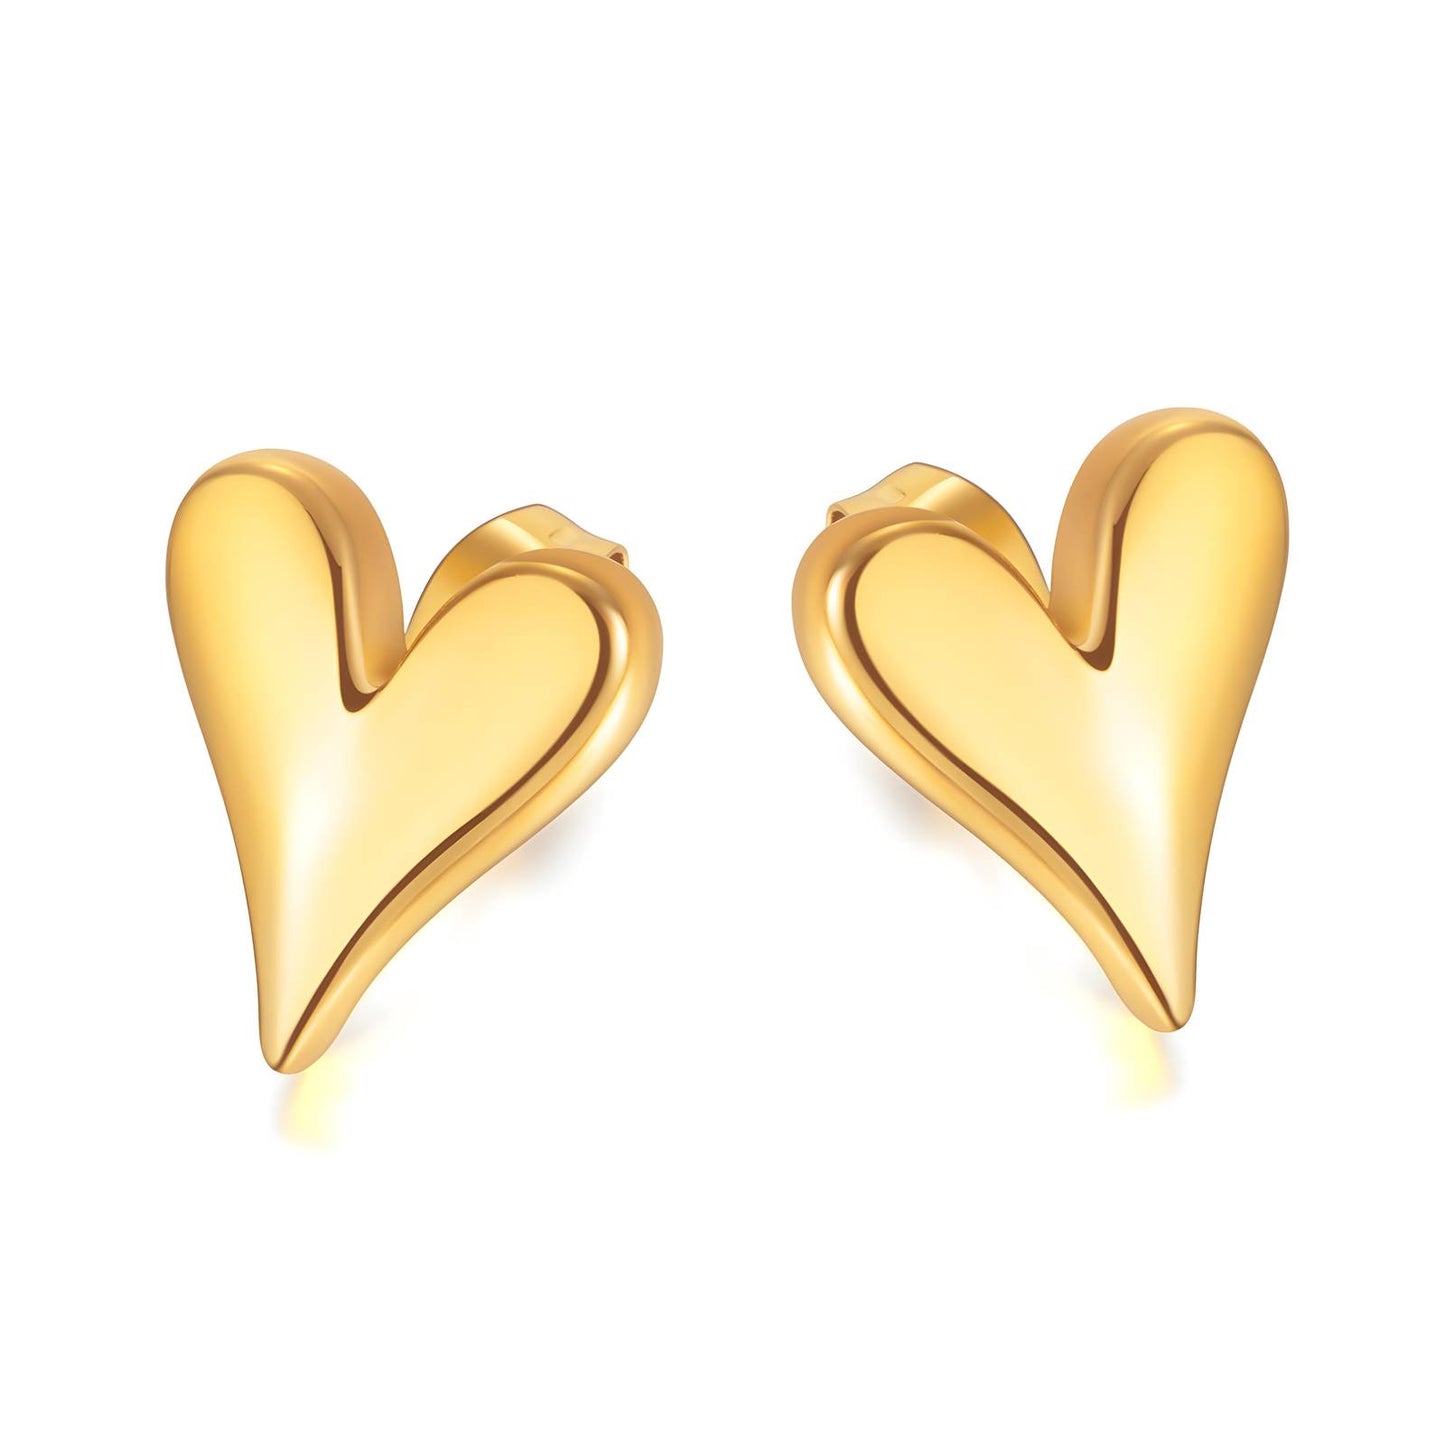 18K gold plated Stainless steel  Hearts earrings, Intensity